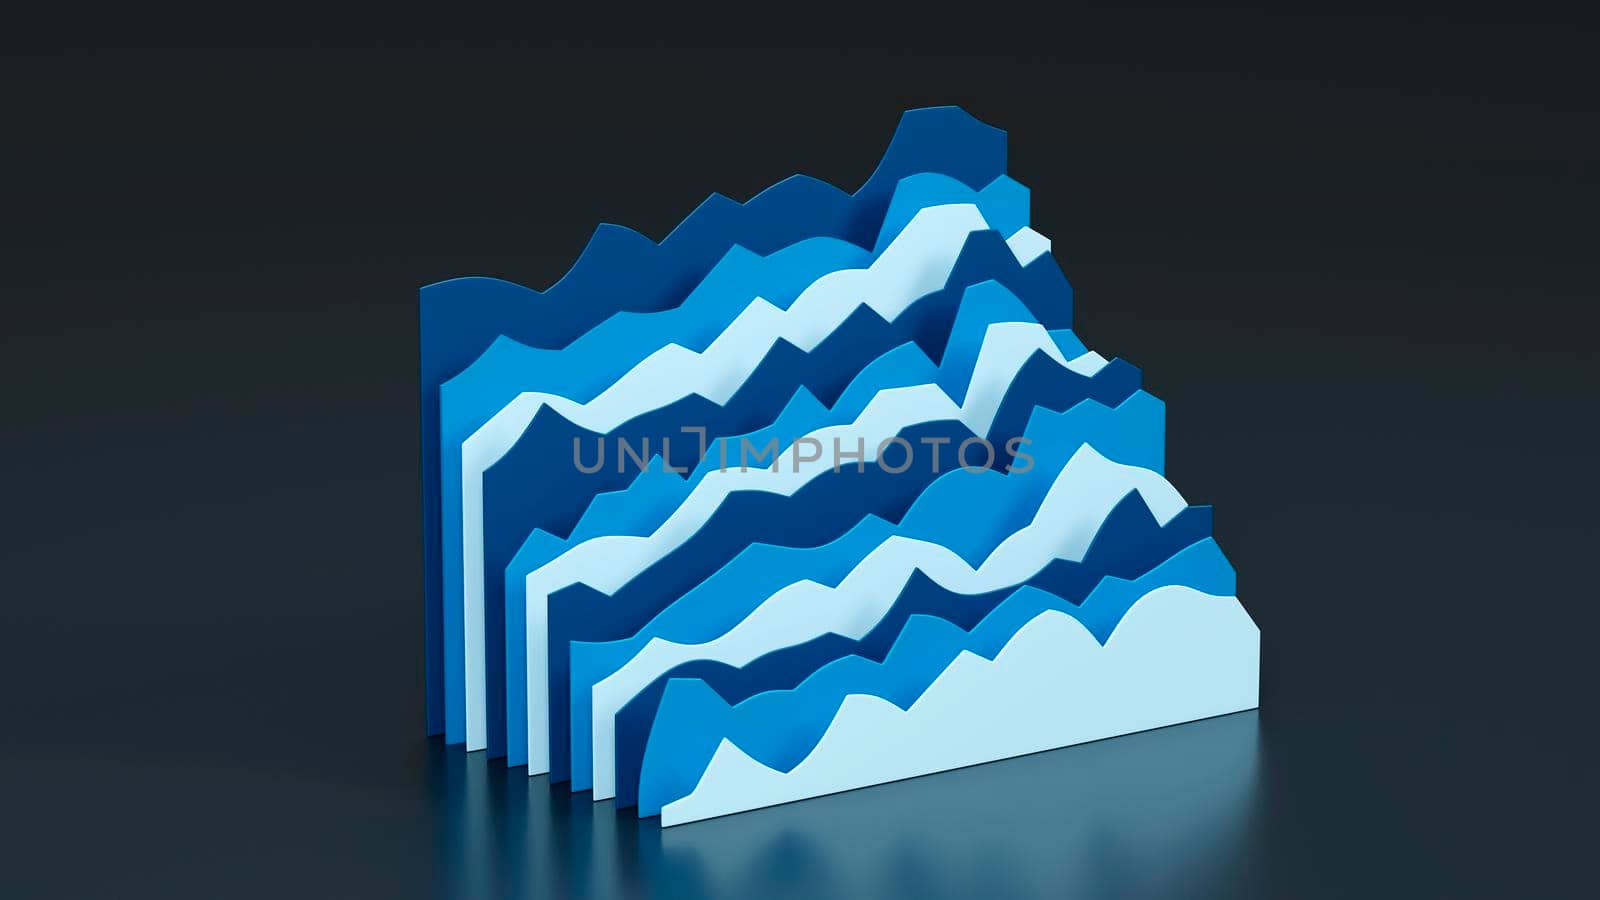 Set of blue charts on dark background. 3D render